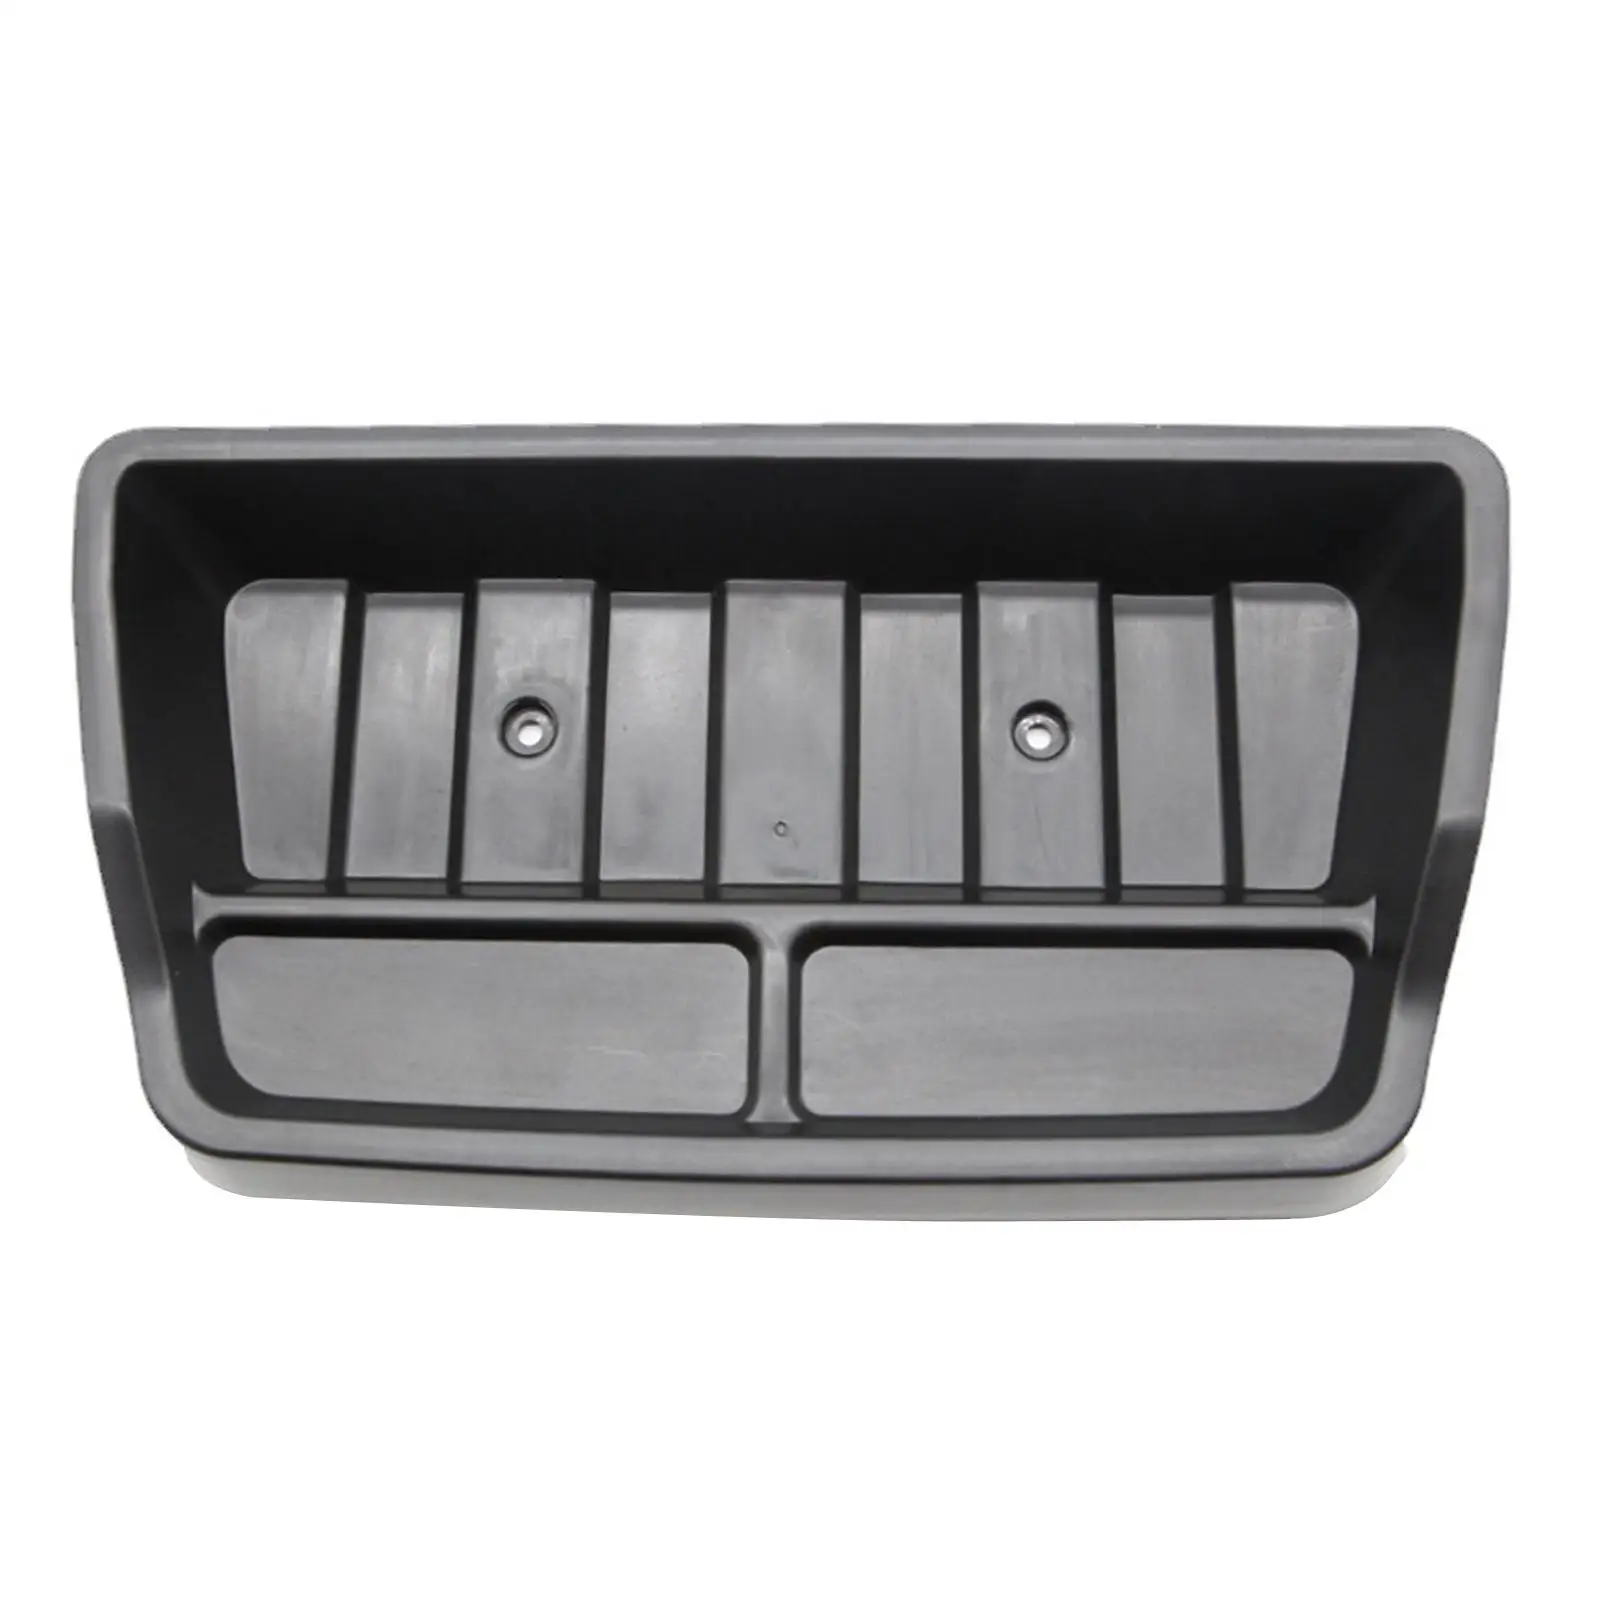 Center Console Dashboard Storage Box Organizer Holder Tray Phone Holder for Jeep Wrangler TJ 97-06 Car Interior Accessories